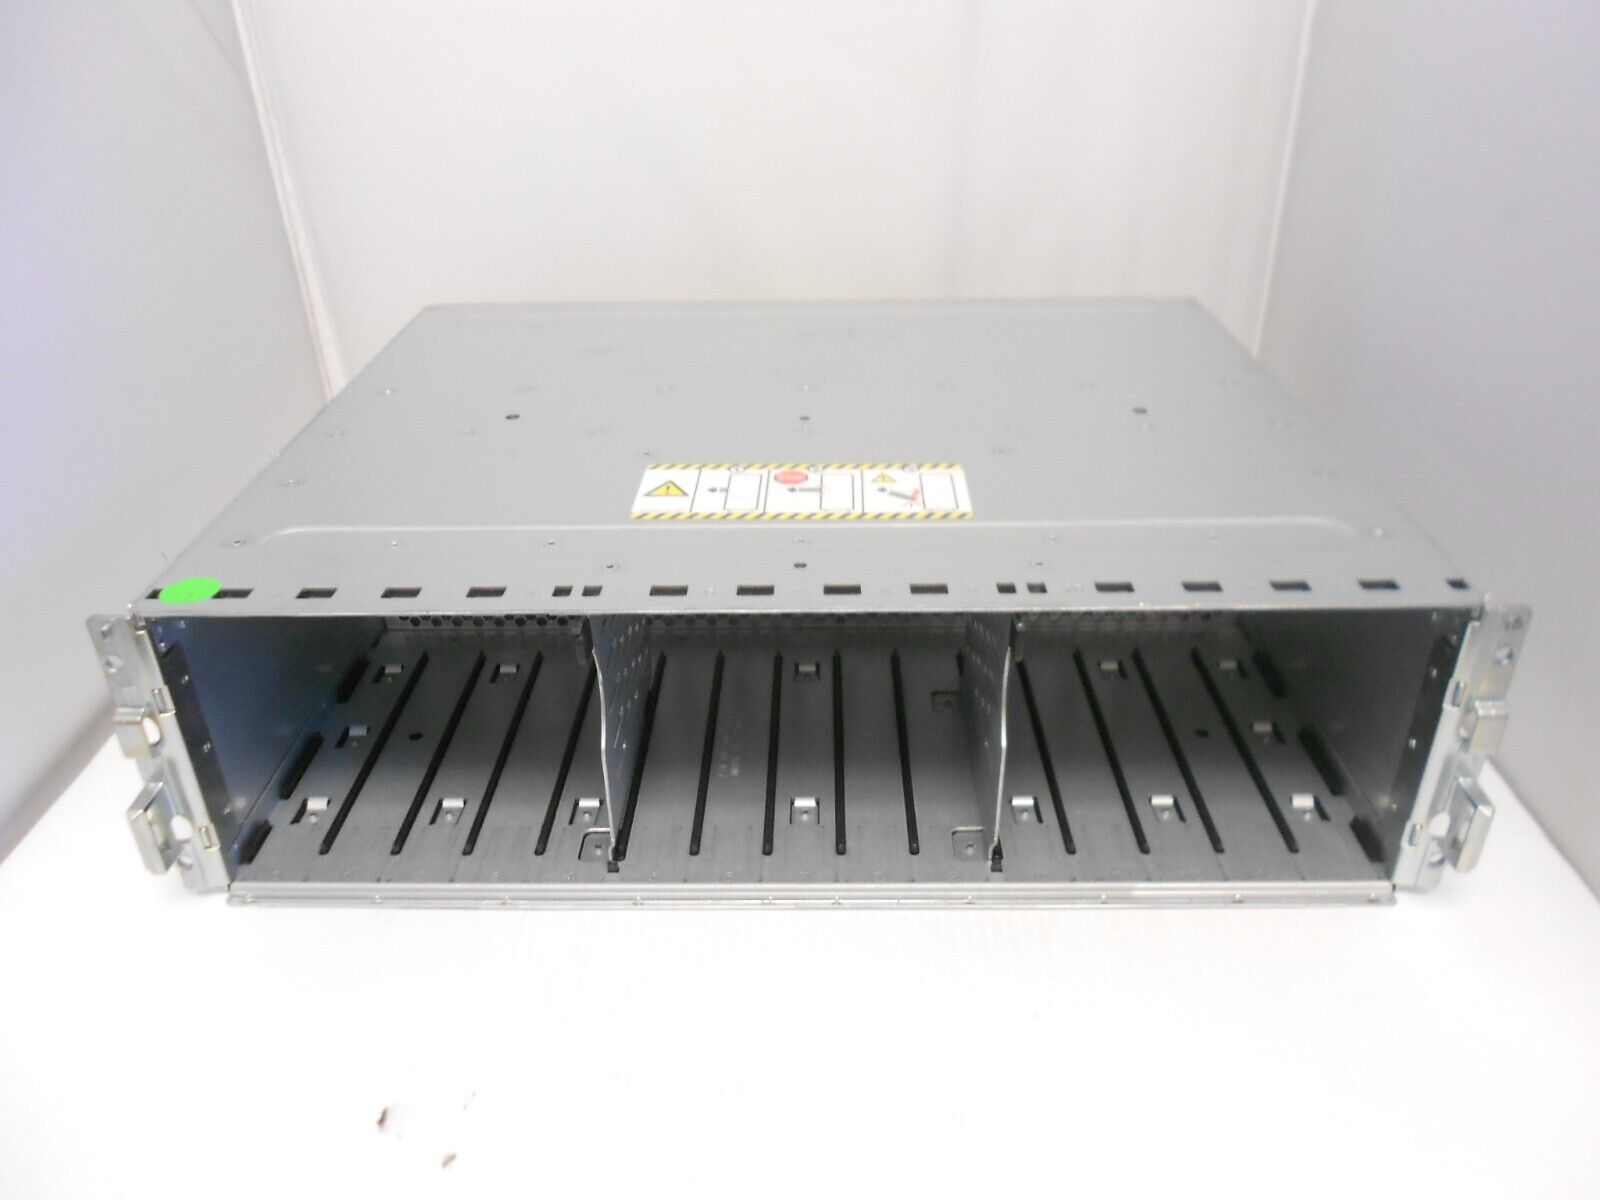 EMC Expansion Array Jbod Disk Array Shelf 15 Bay Chassis 6Gbps SAS KTN-STL3